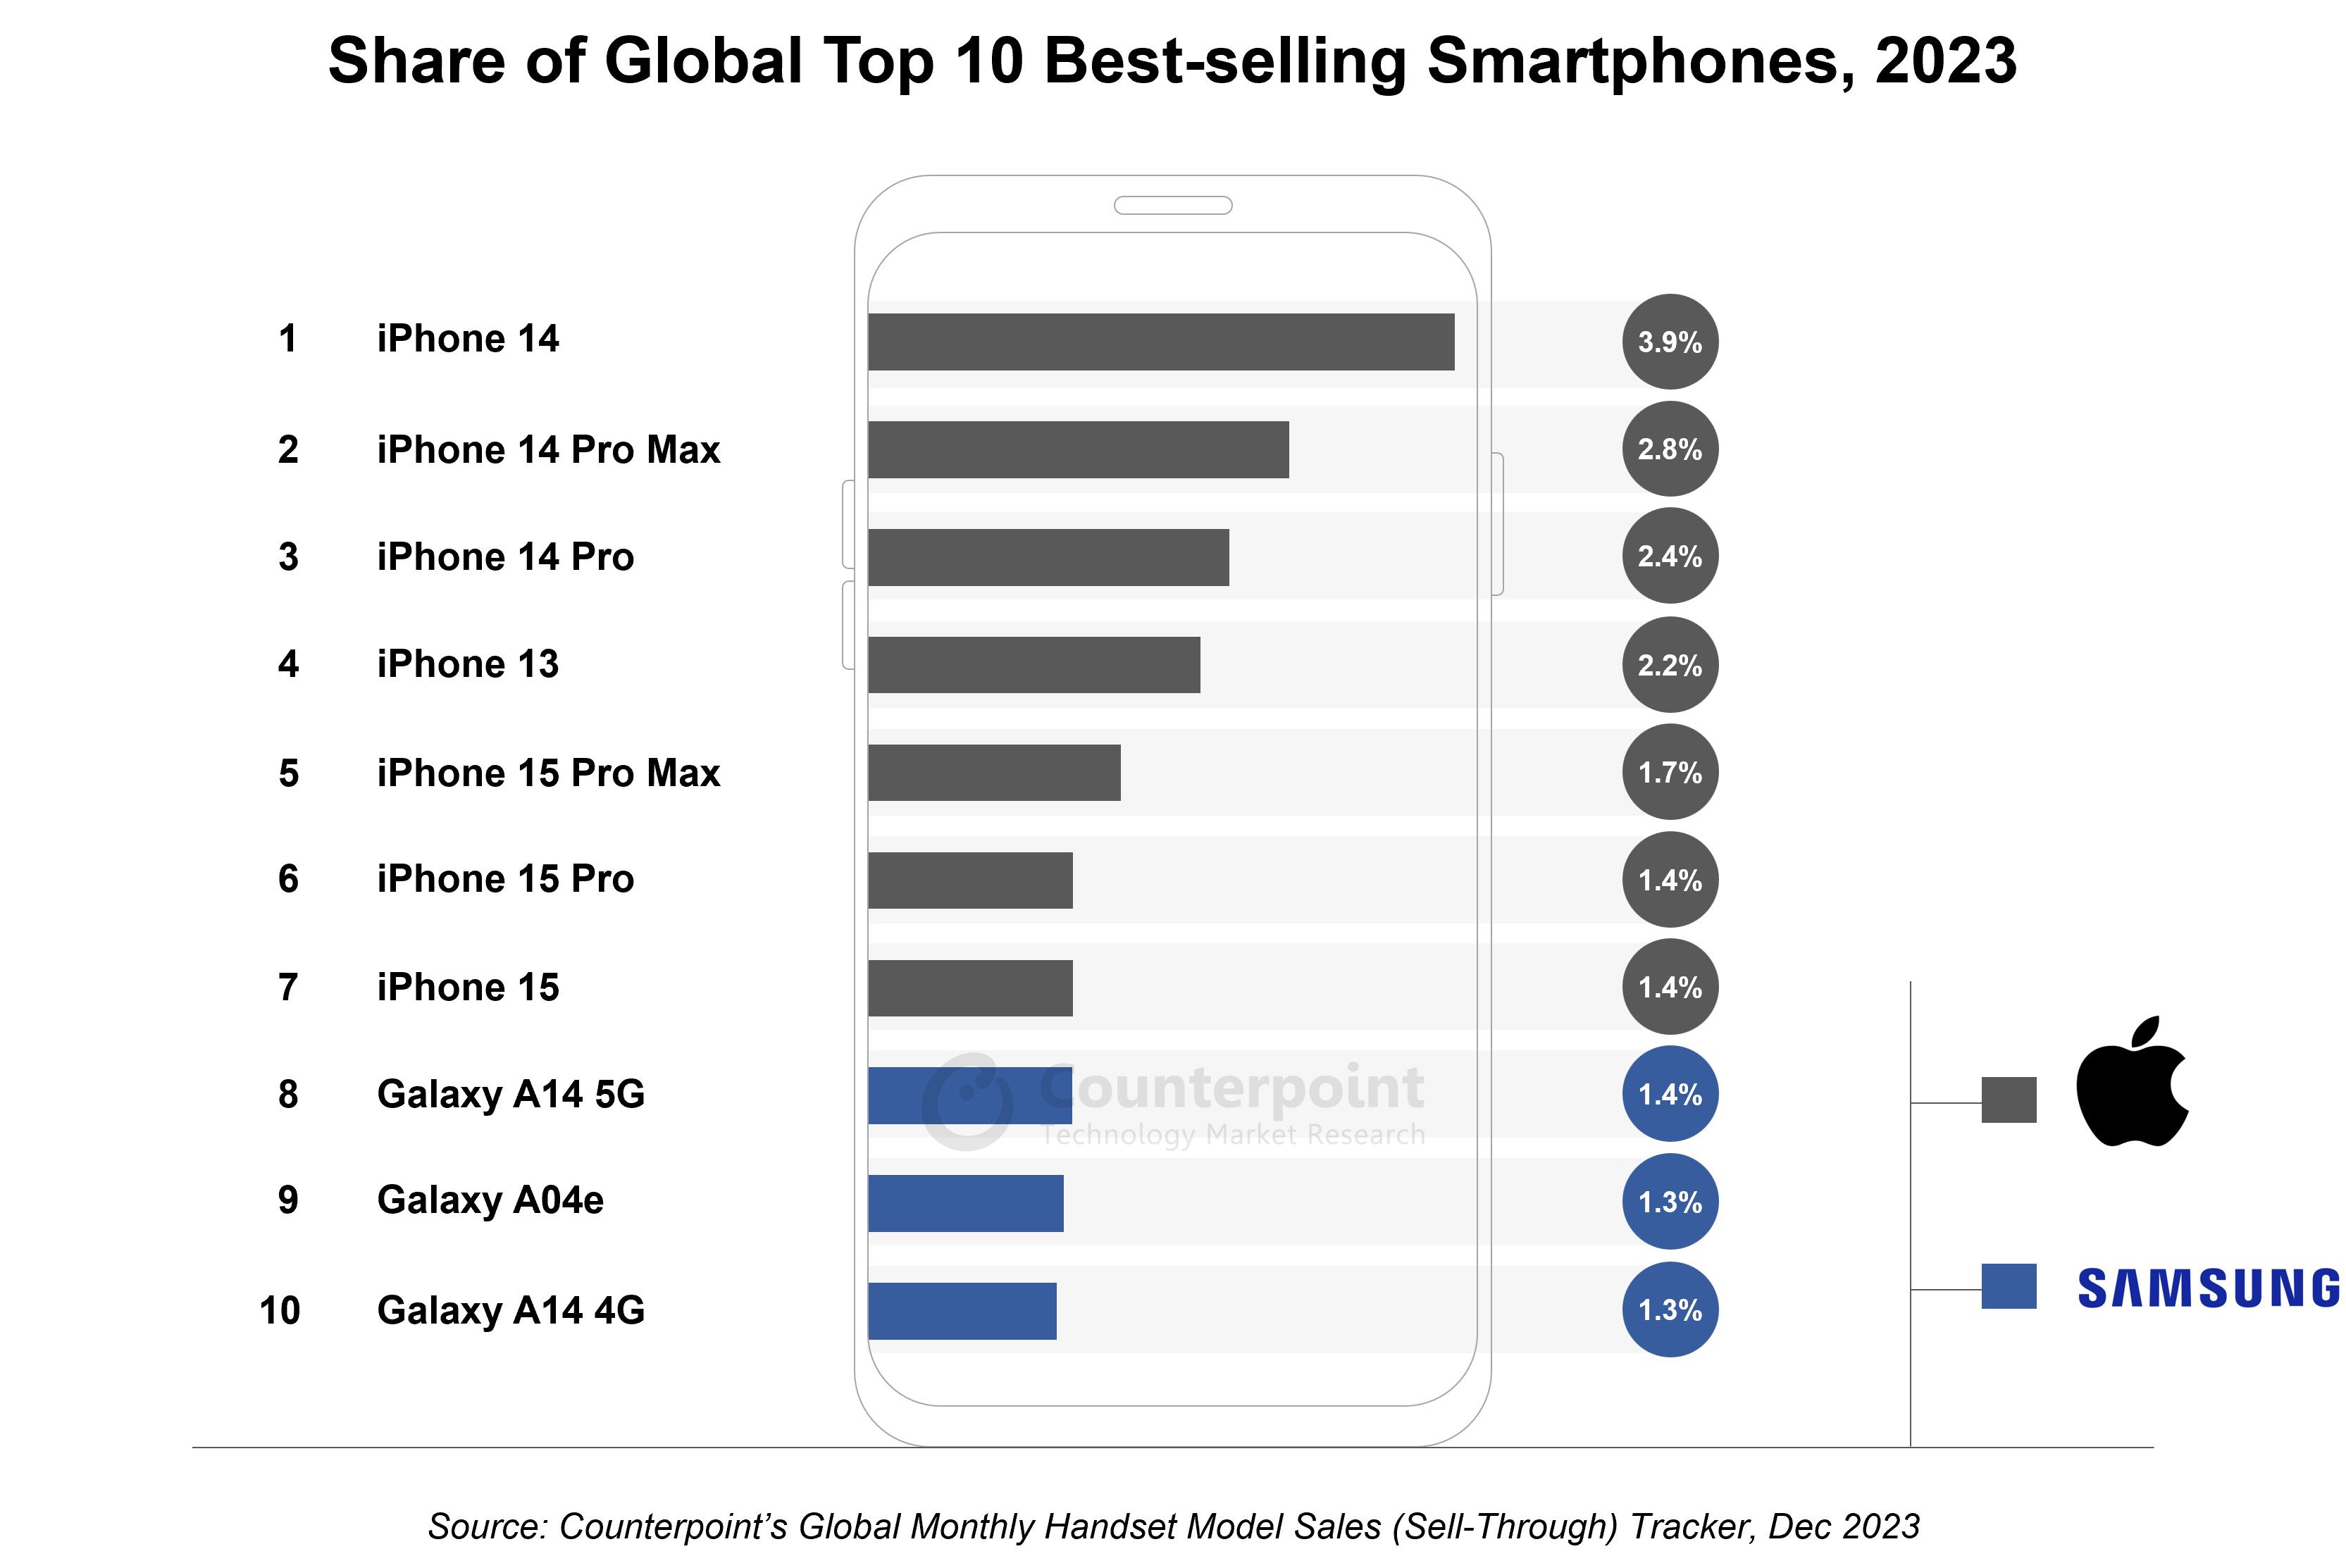 iPhones dominate top 7 best-selling smartphones of last year